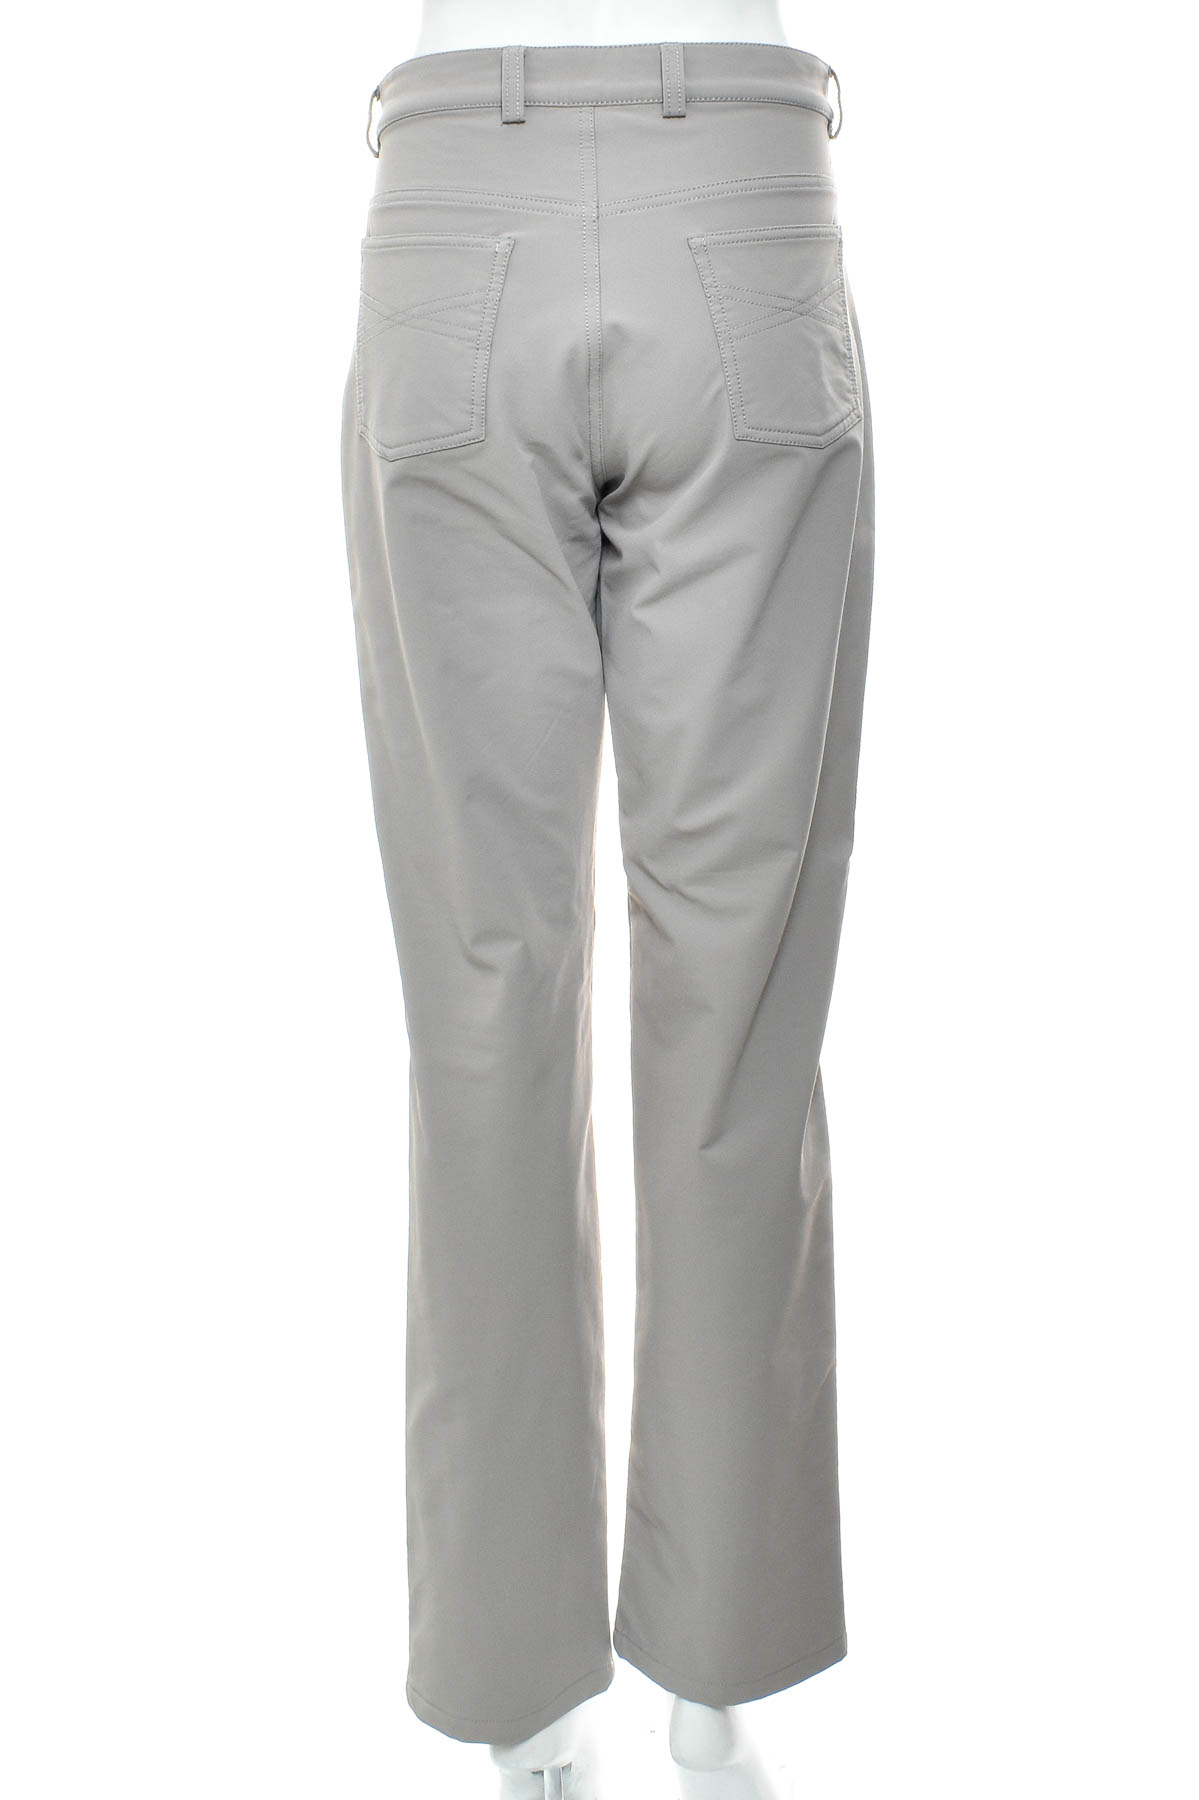 Women's trousers - Golfino - 1